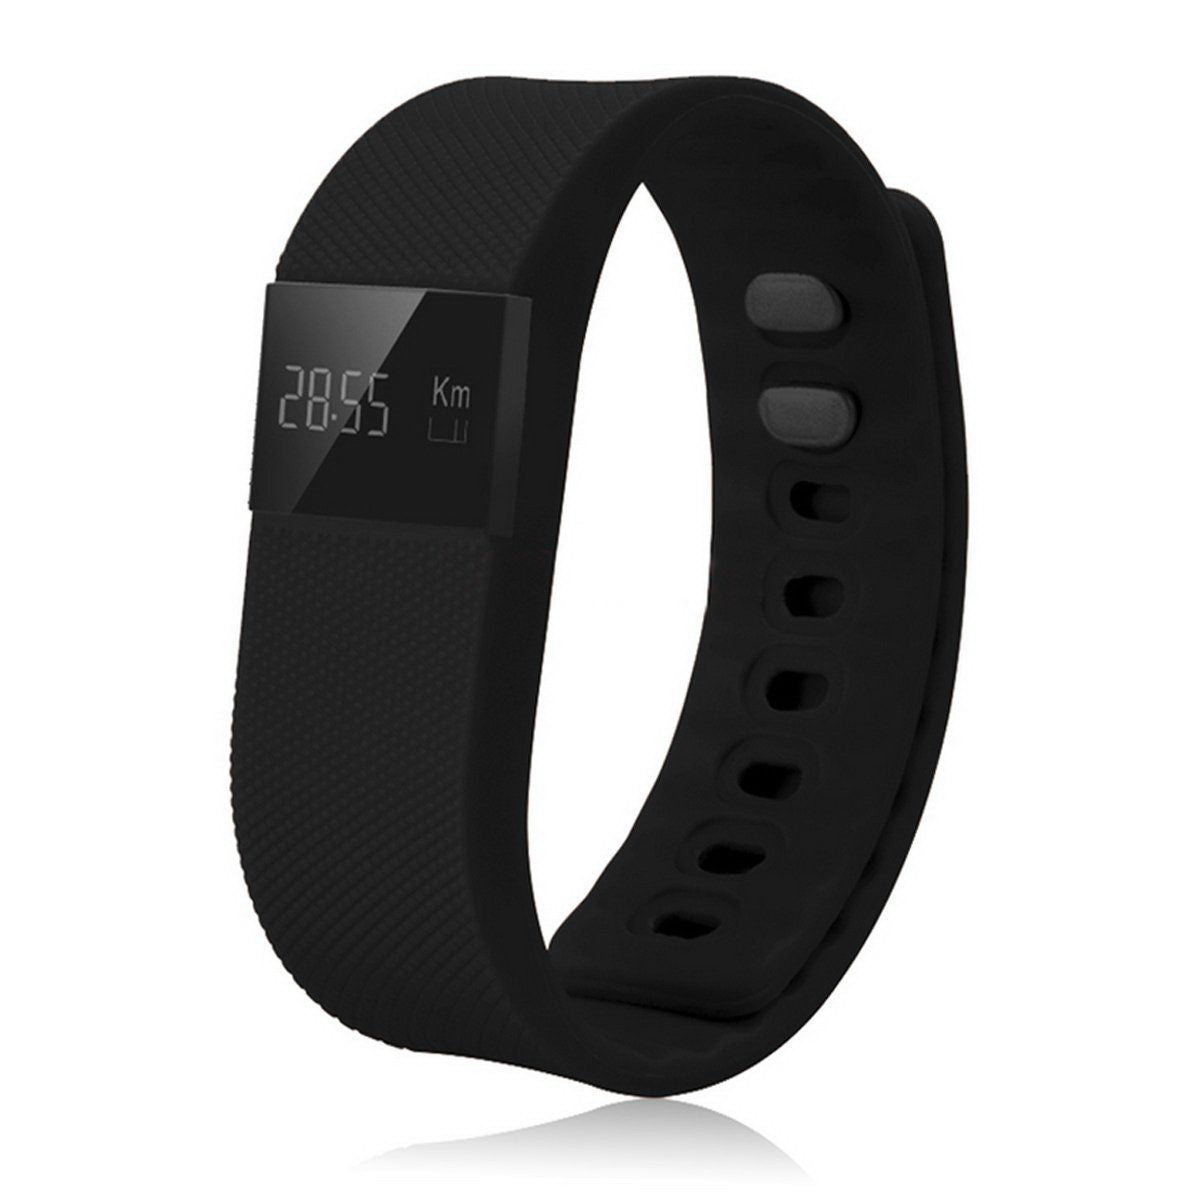 Smartband Waterproof Wristband Fitness Sleep Tracker Pedometer Bluetooth 4.0 For Samsung iPhone IOS Android